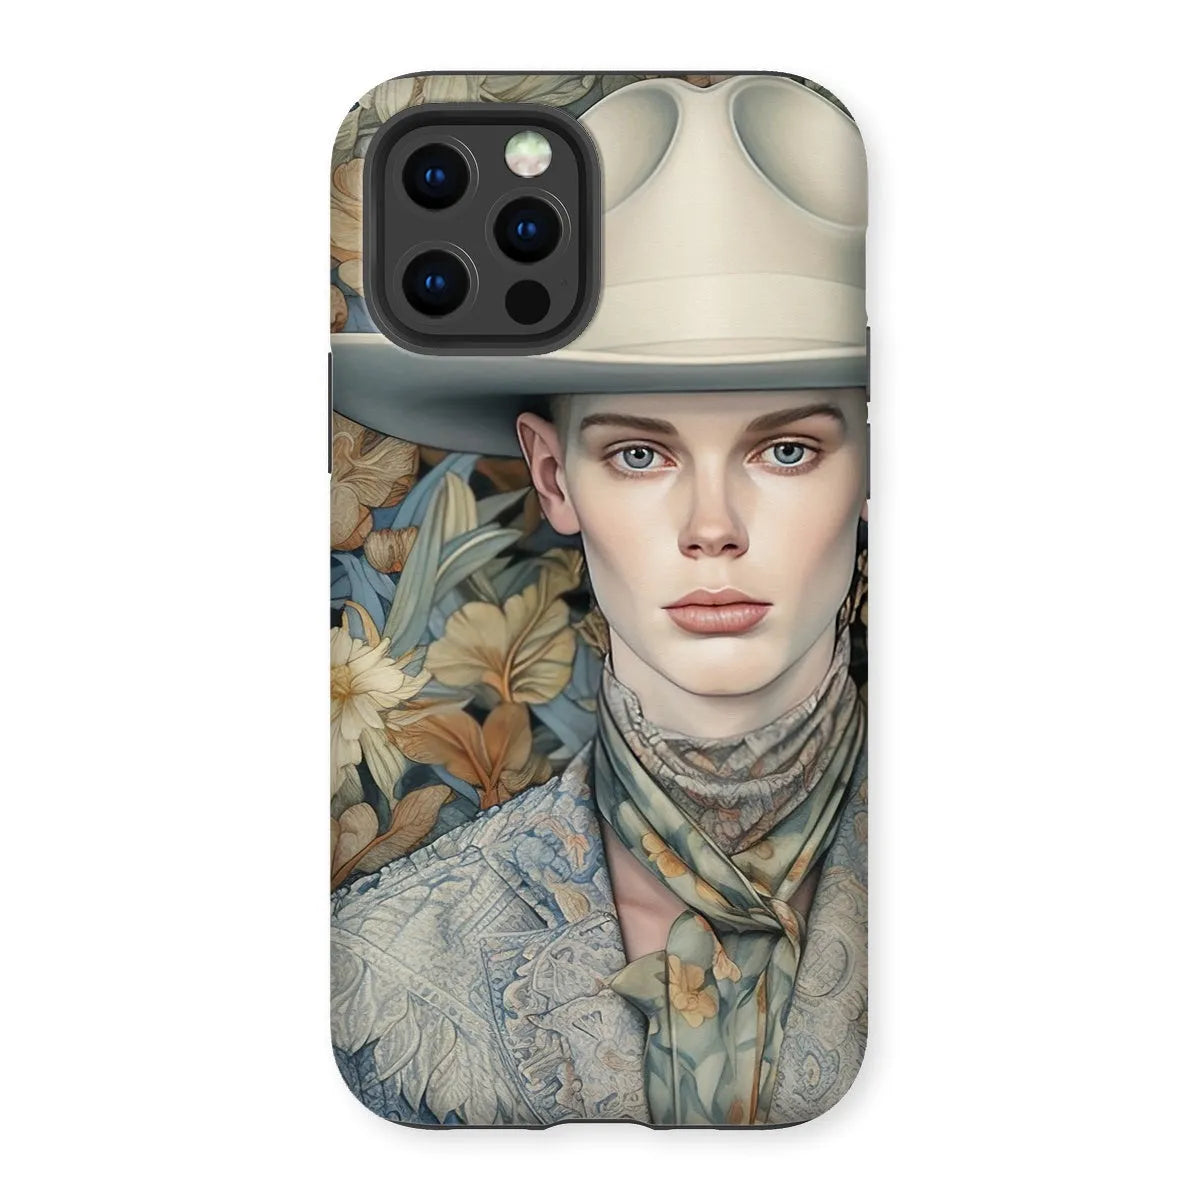 Jasper - Dandy Twink Cowboy Aesthetic Art Phone Case - Iphone 12 Pro / Matte - Mobile Phone Cases - Aesthetic Art